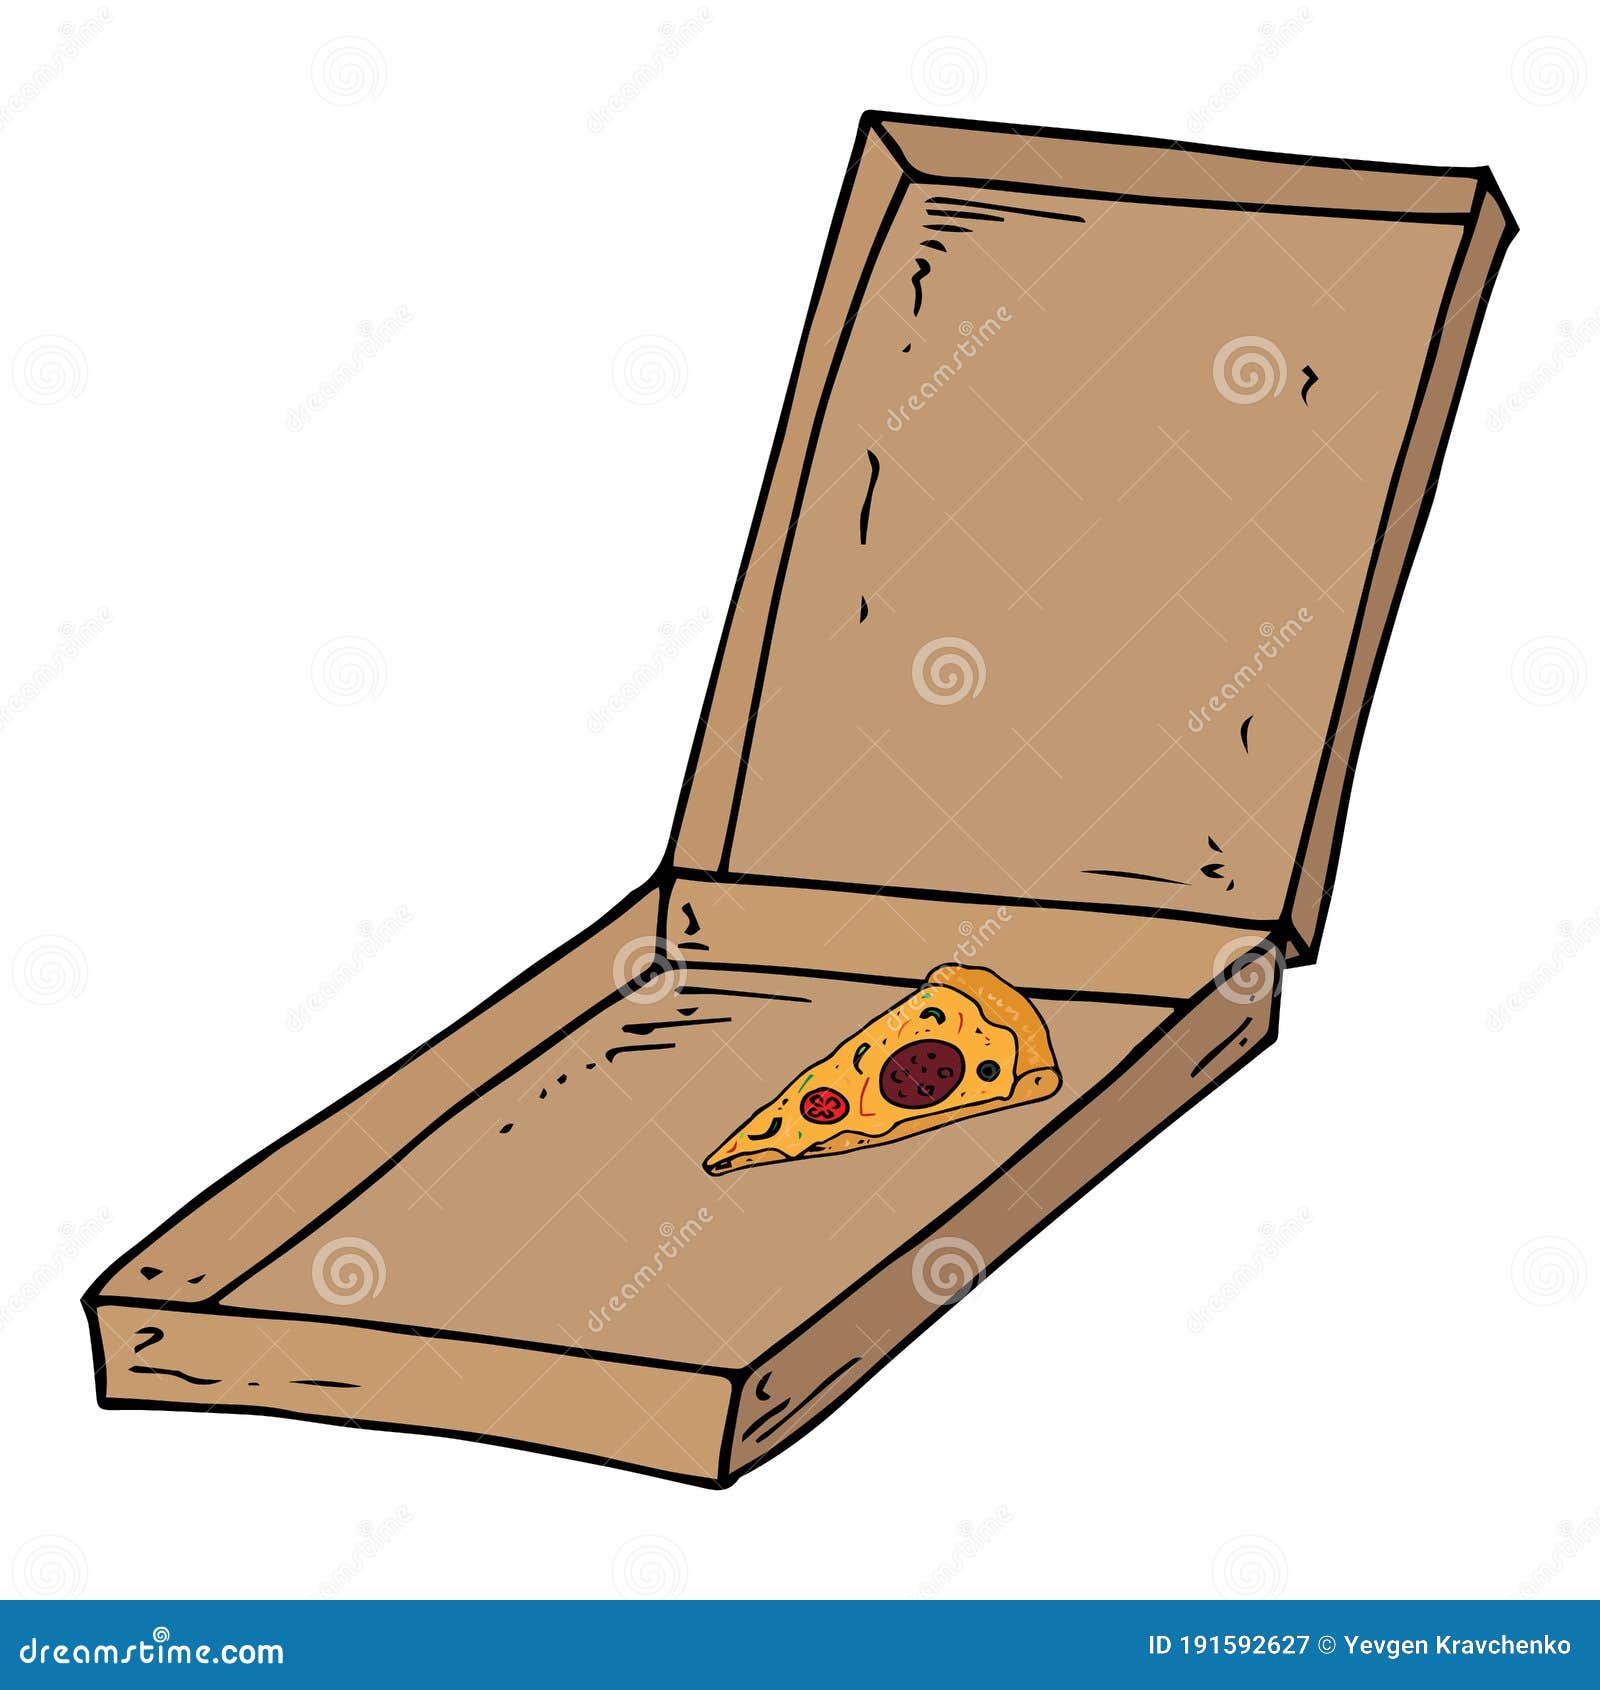 Open pizza box vector illustration.